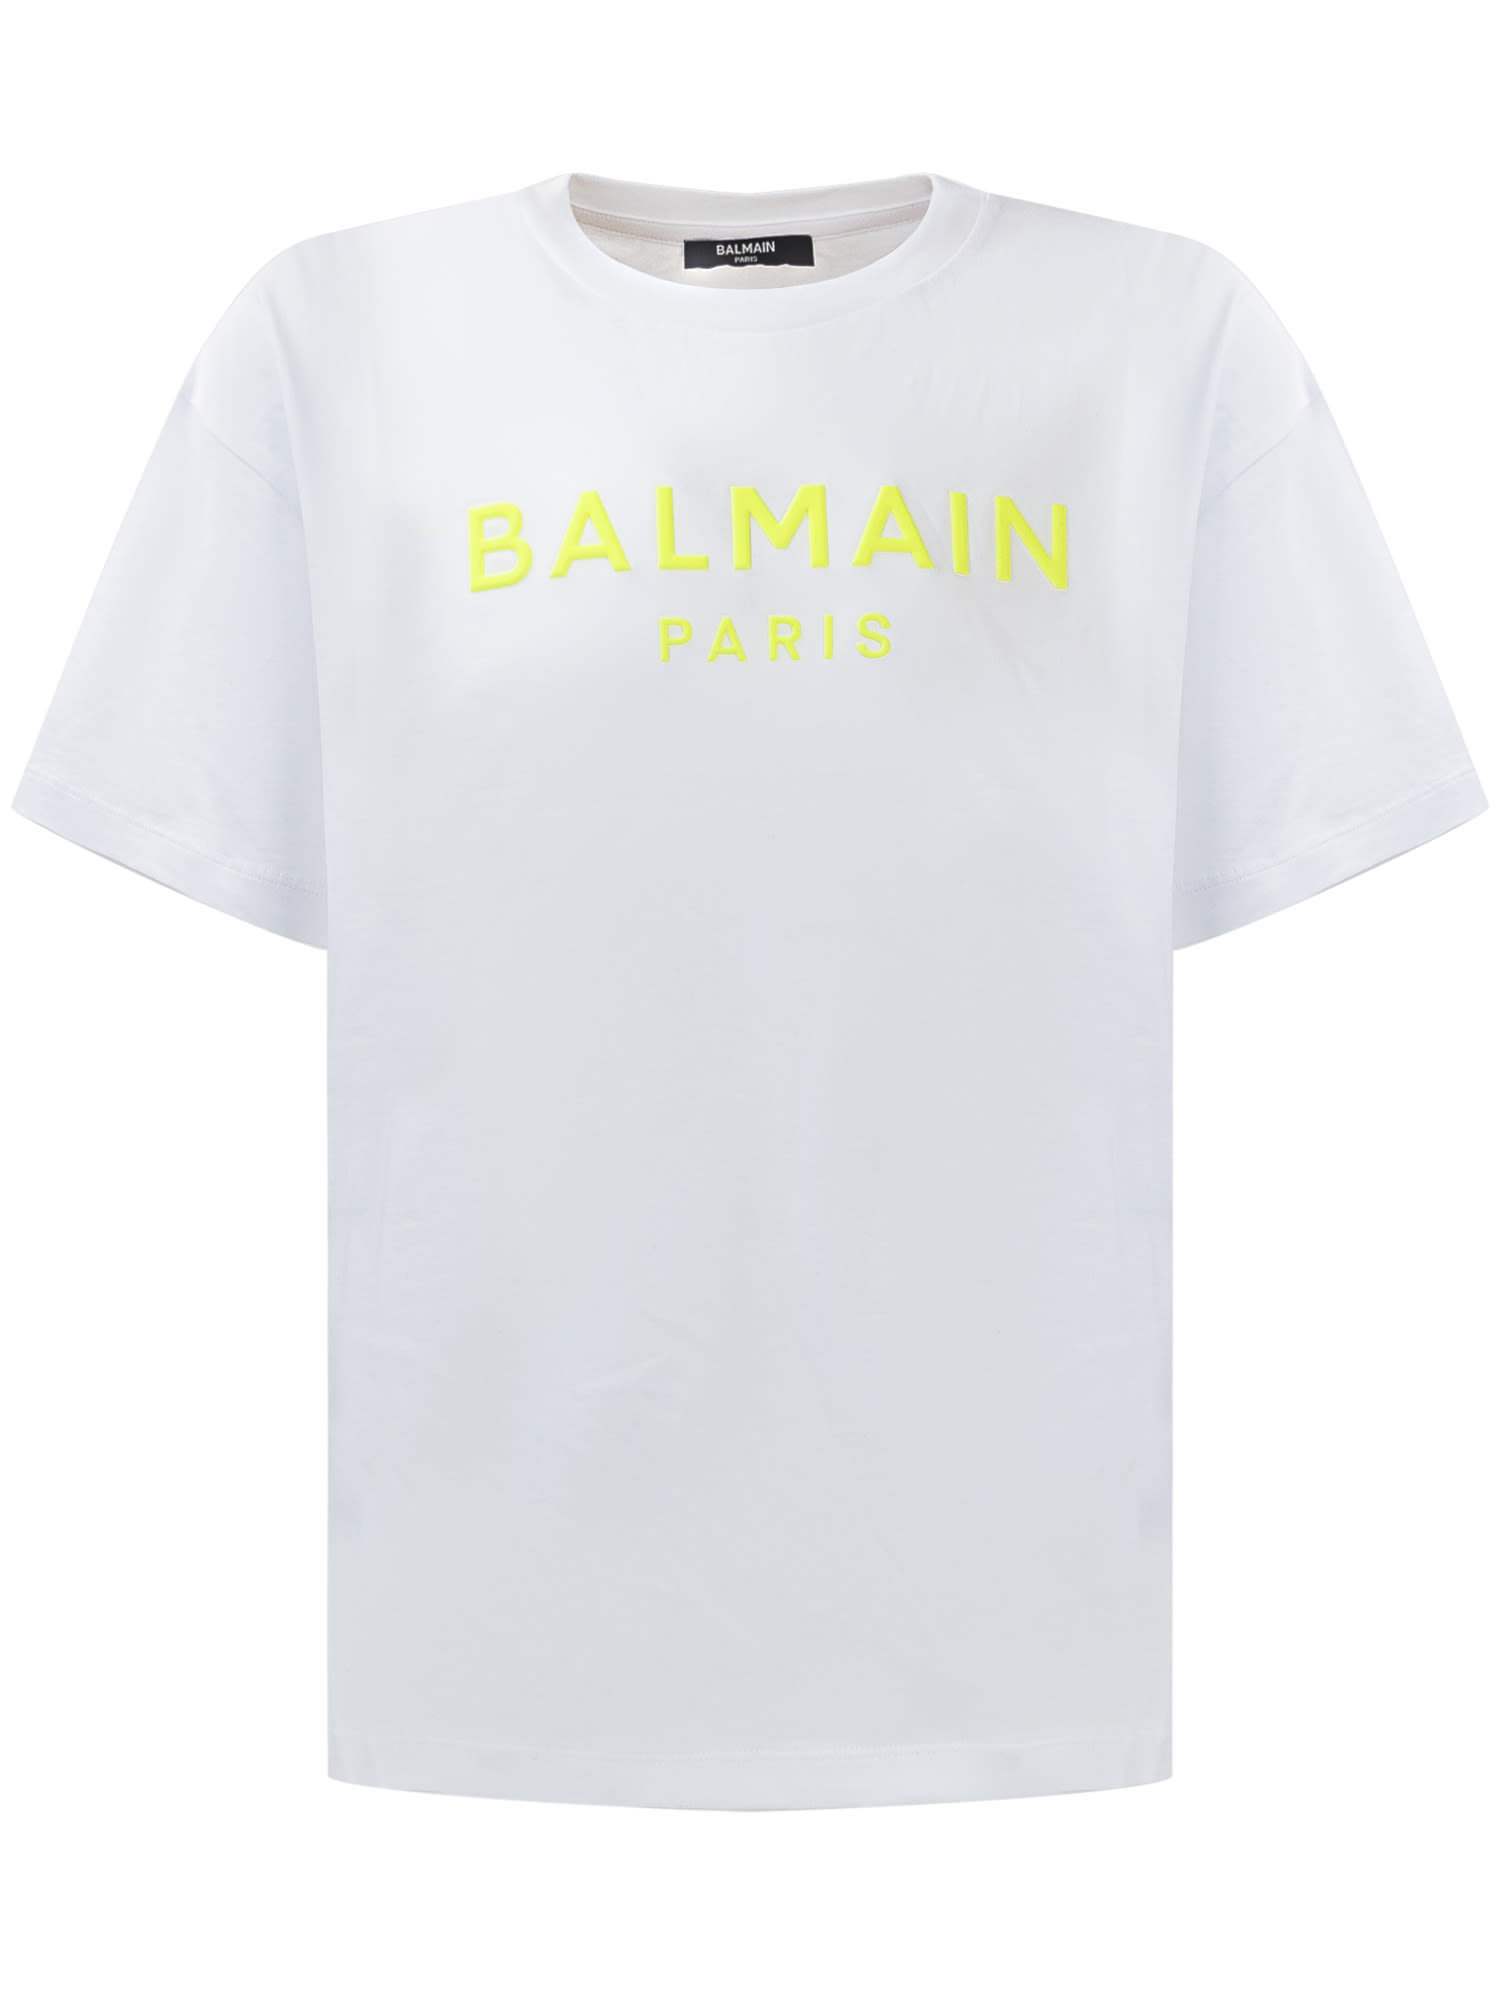 Balmain Kids' Logo T-shirt In White/yellow